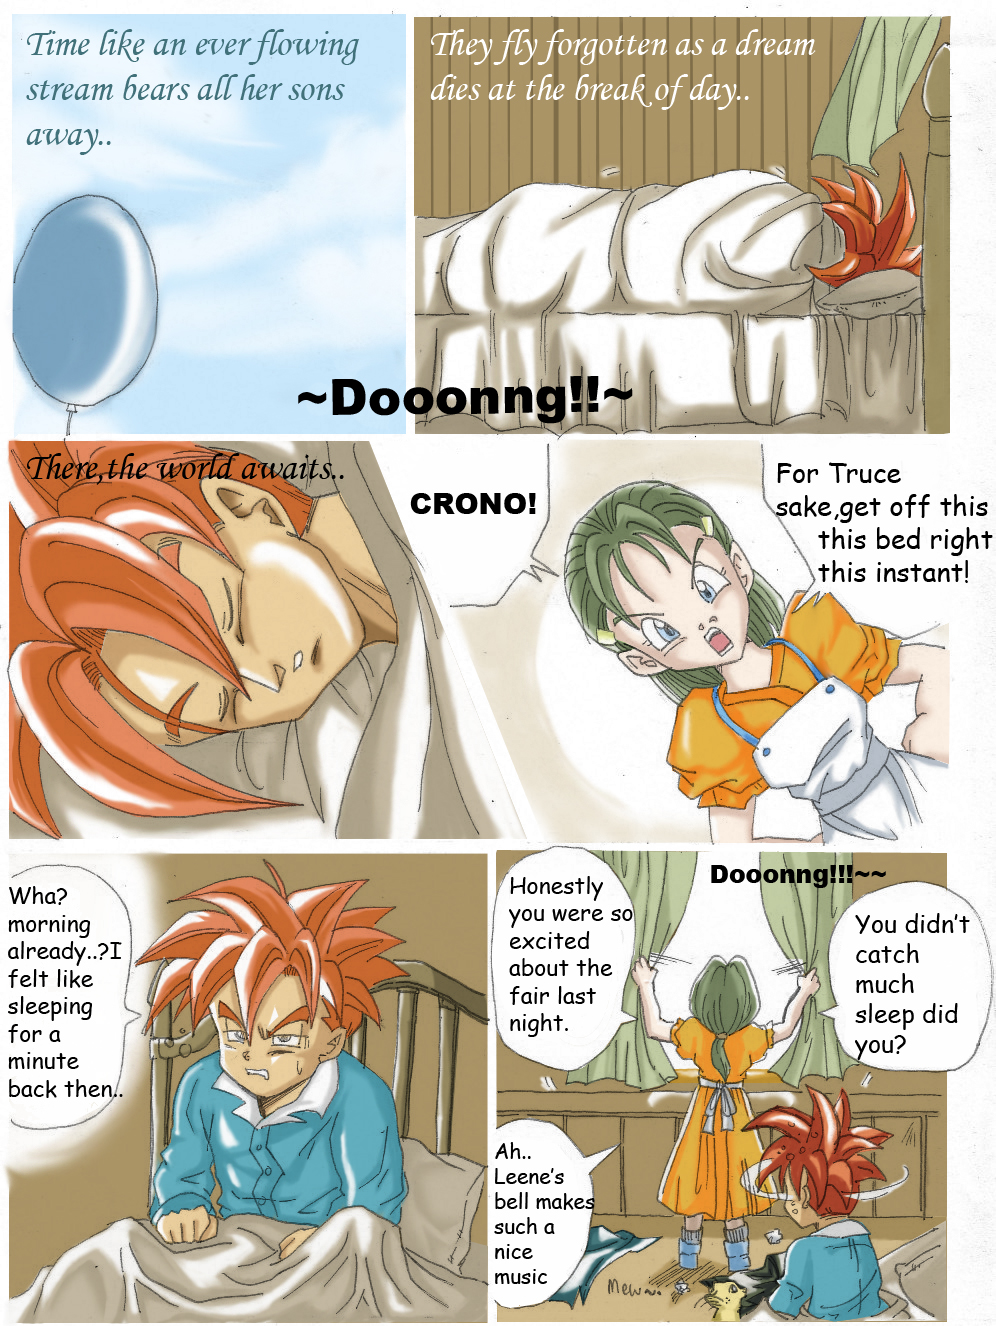 Chrono Trigger Manga by AmyGuardia F_18135358